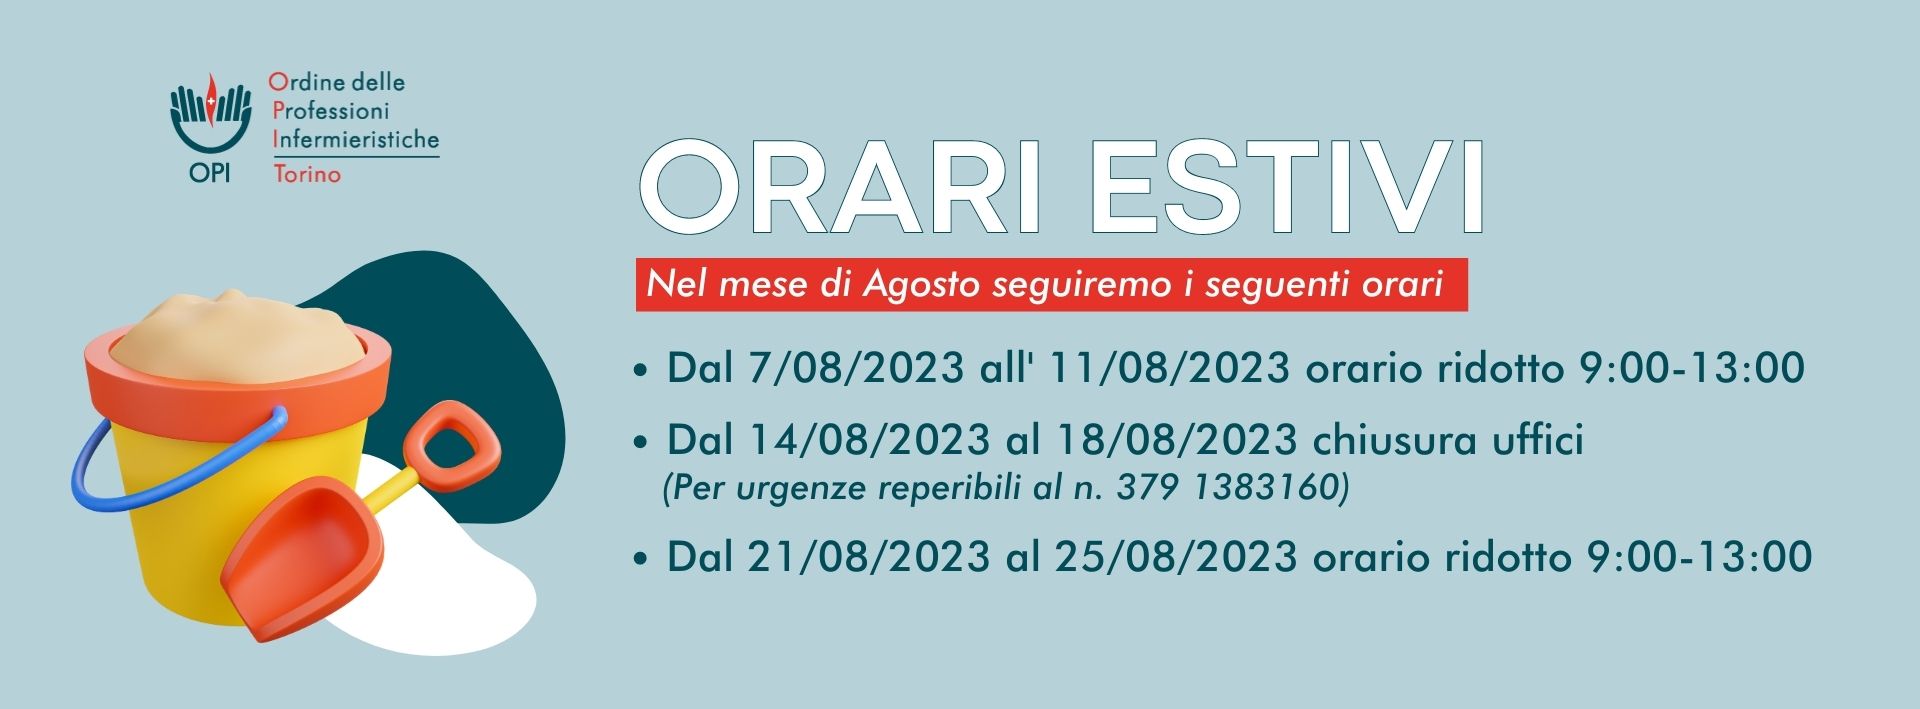 Orari_estivi-OPI_Torino.jpg